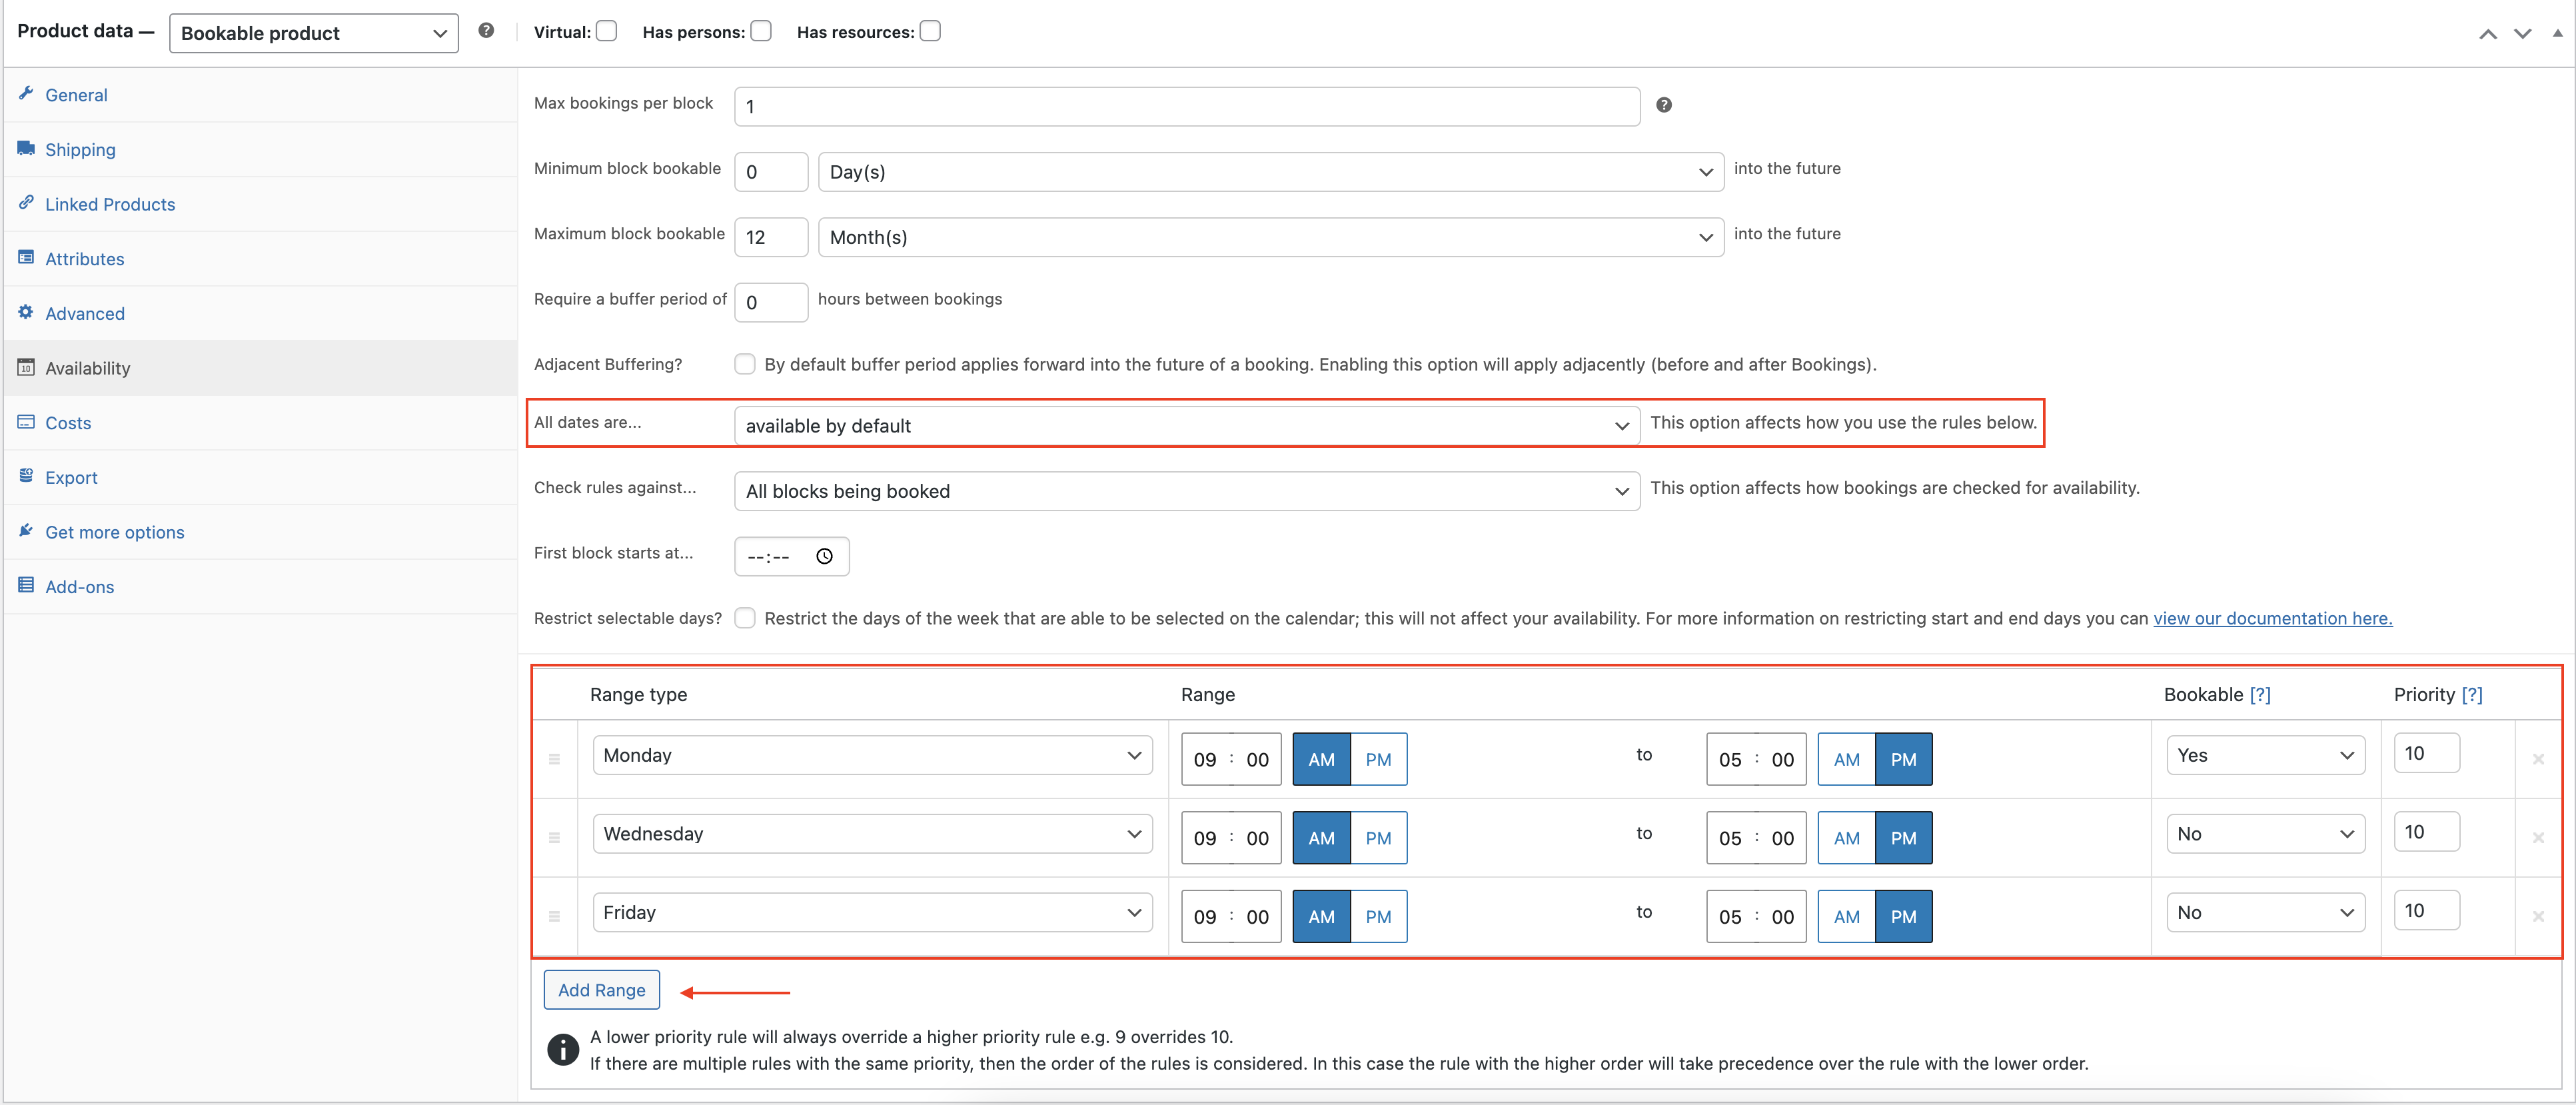 Screenshot of Bookable product data "Availability" settings.